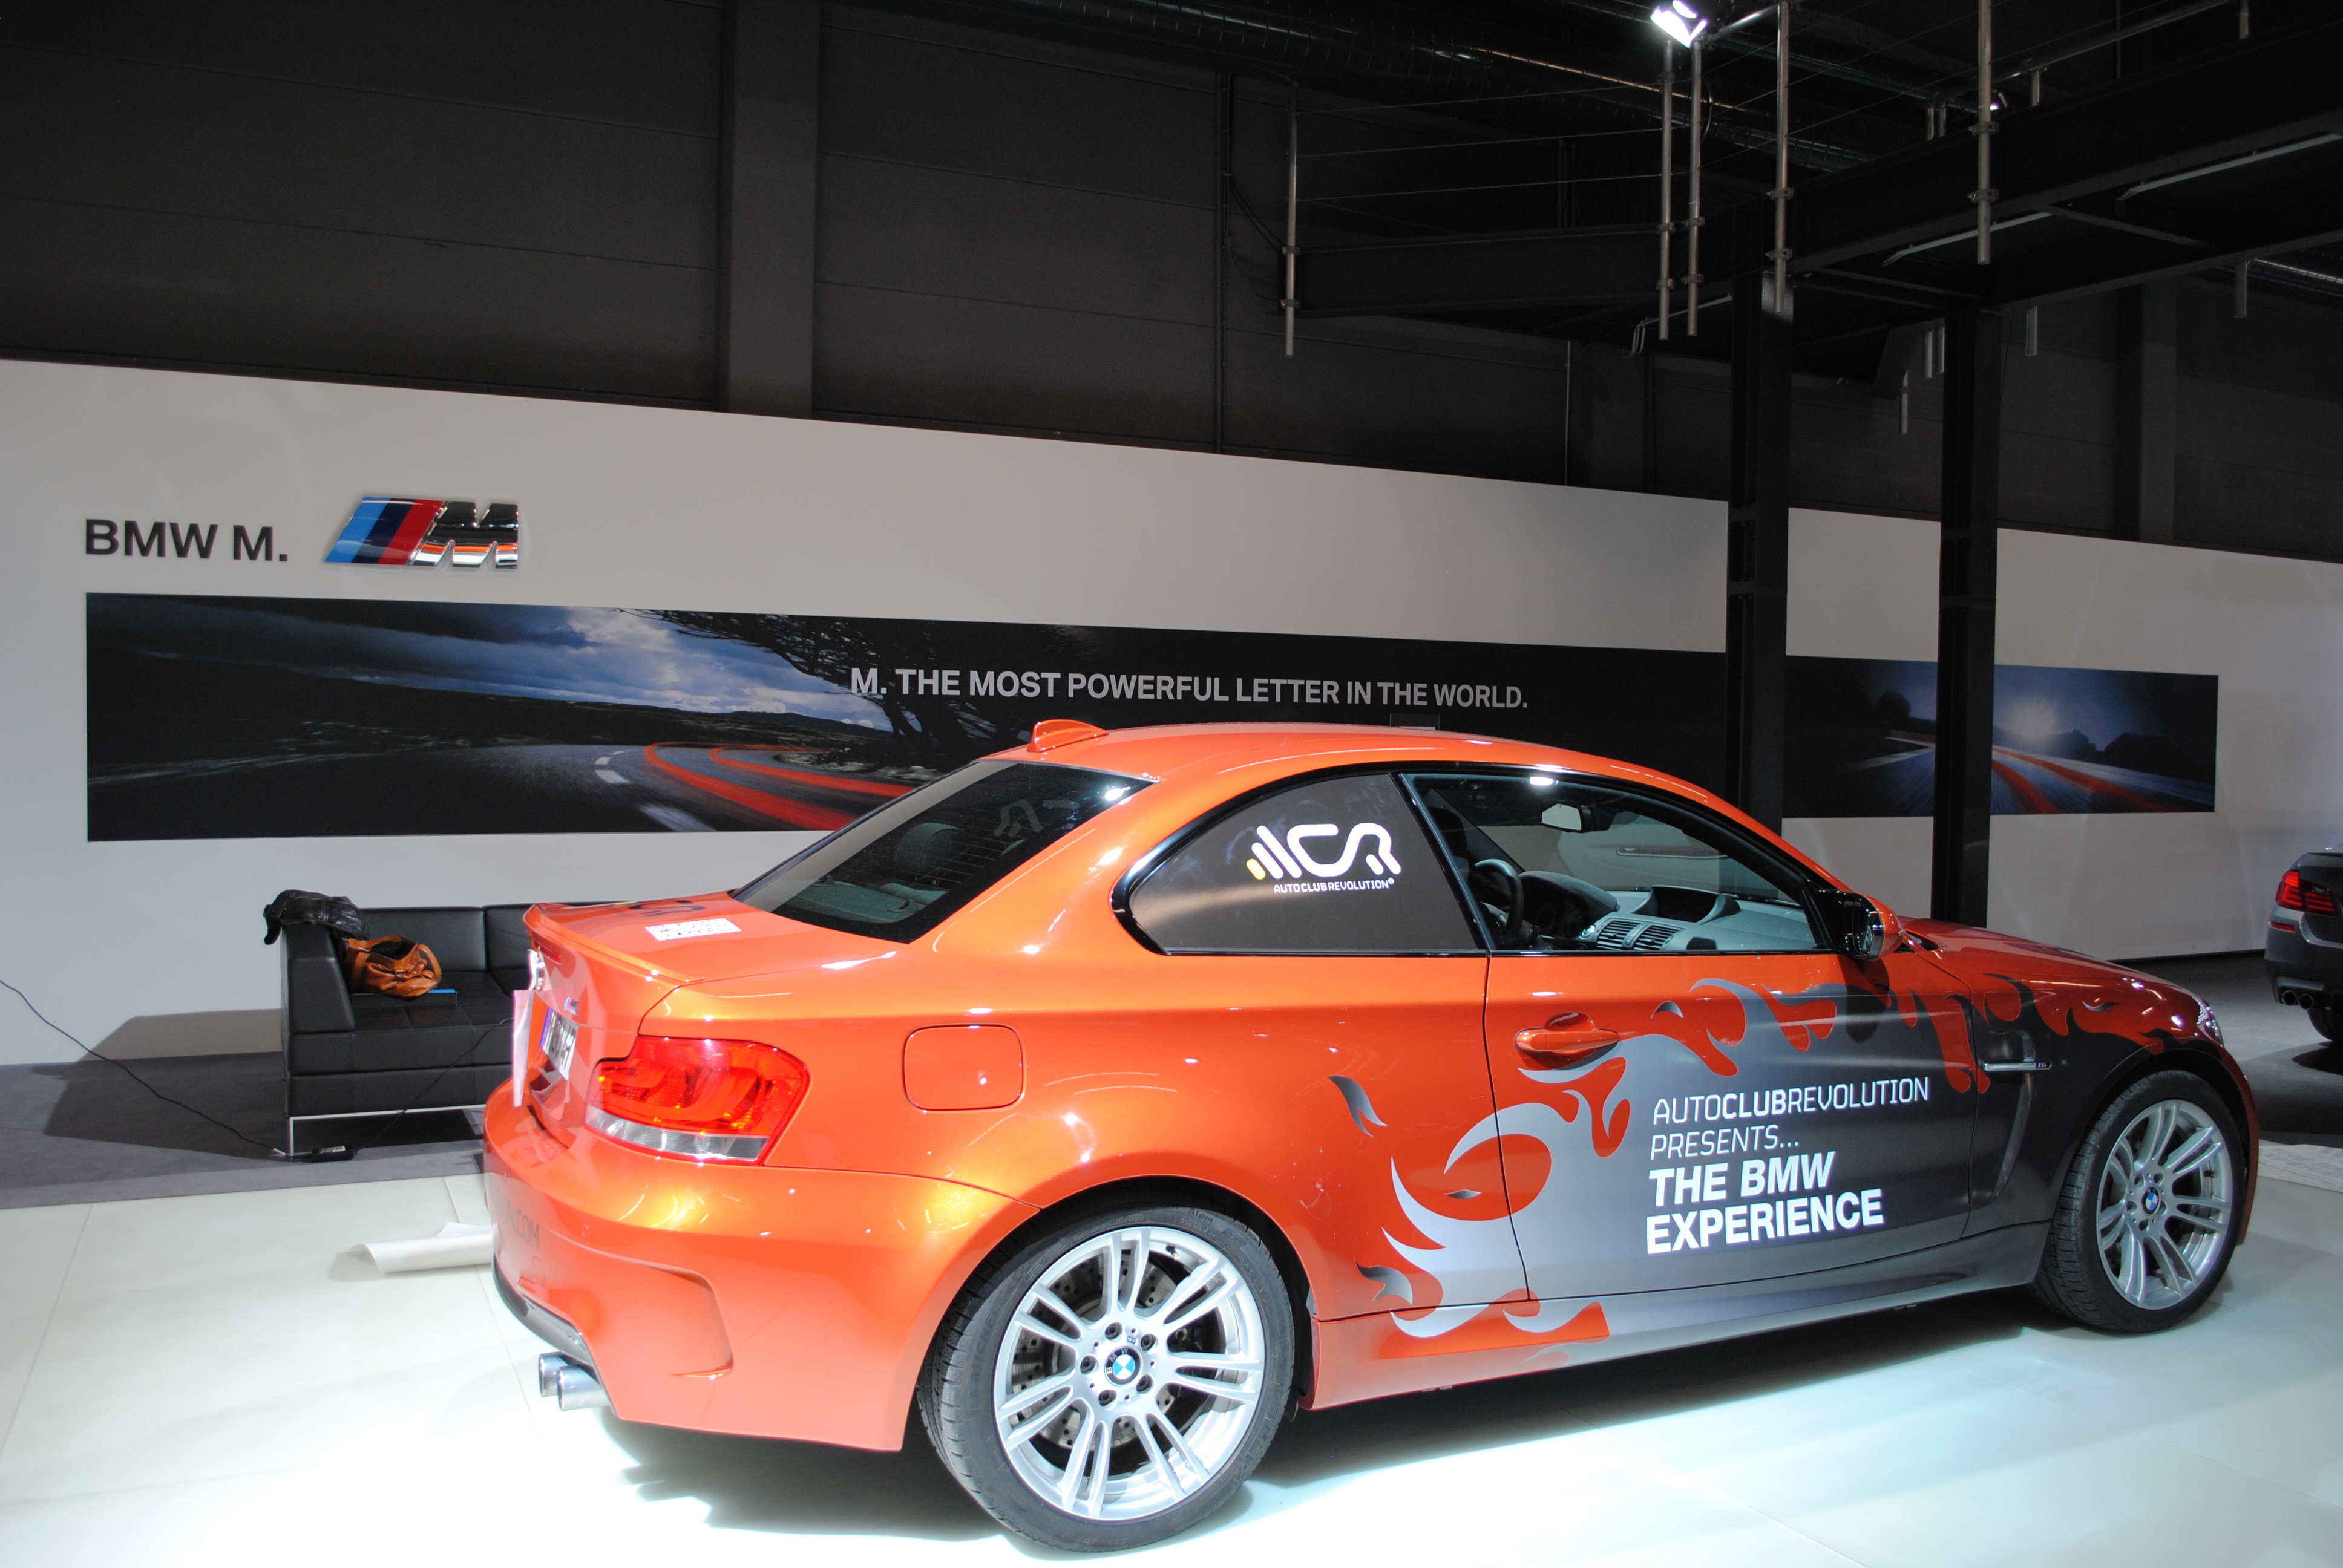 Auto Club Revolution - BMW Experience